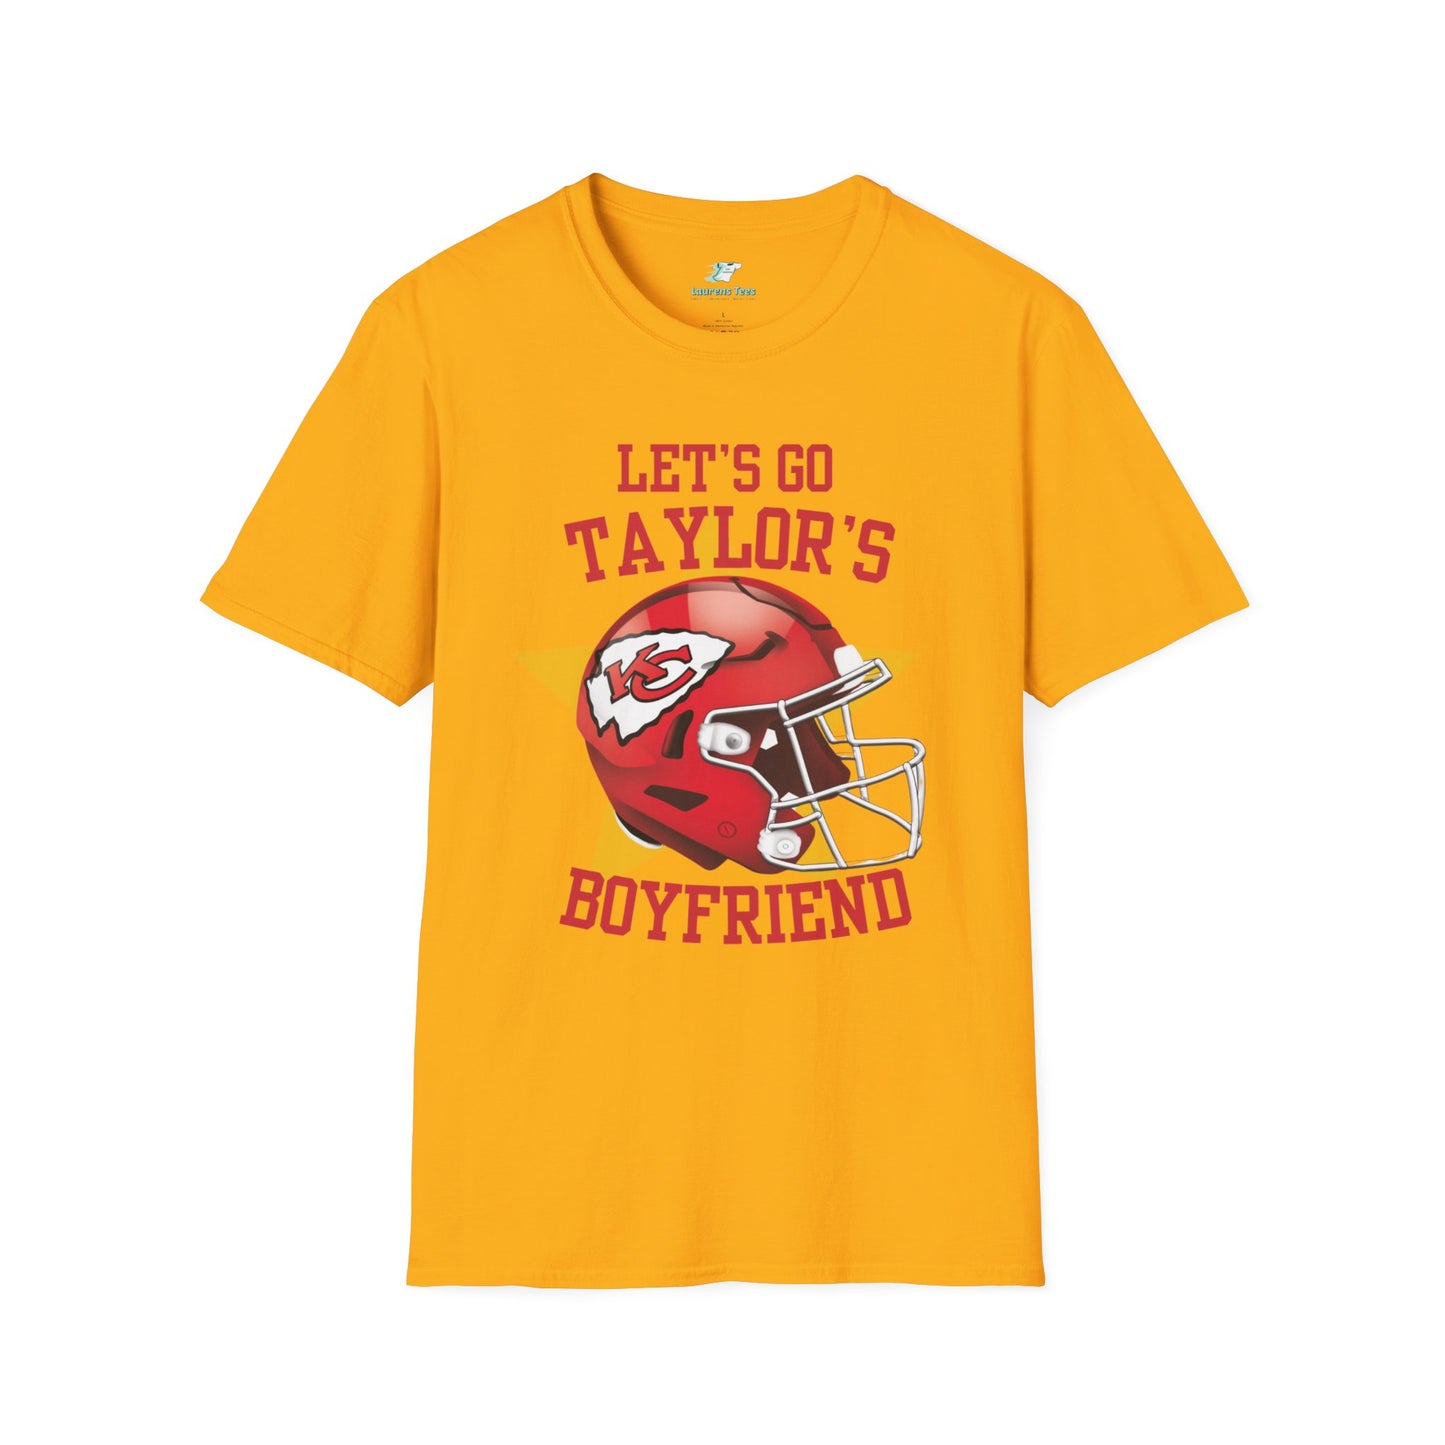 Lets Go Taylors Boyfriend - Unisex Softstyle T-Shirt